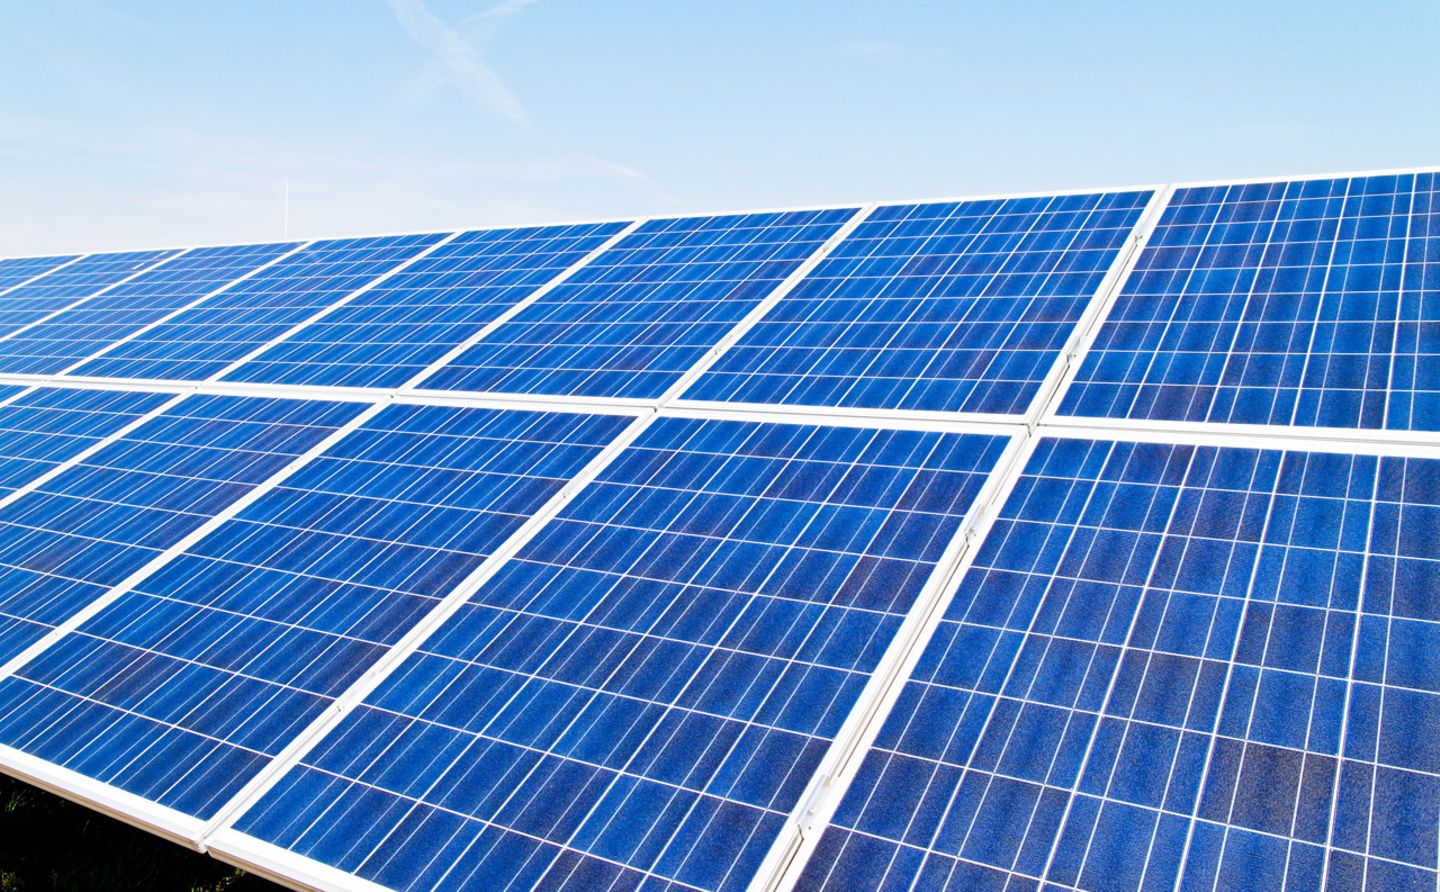 Solarenergie: Solarpanels